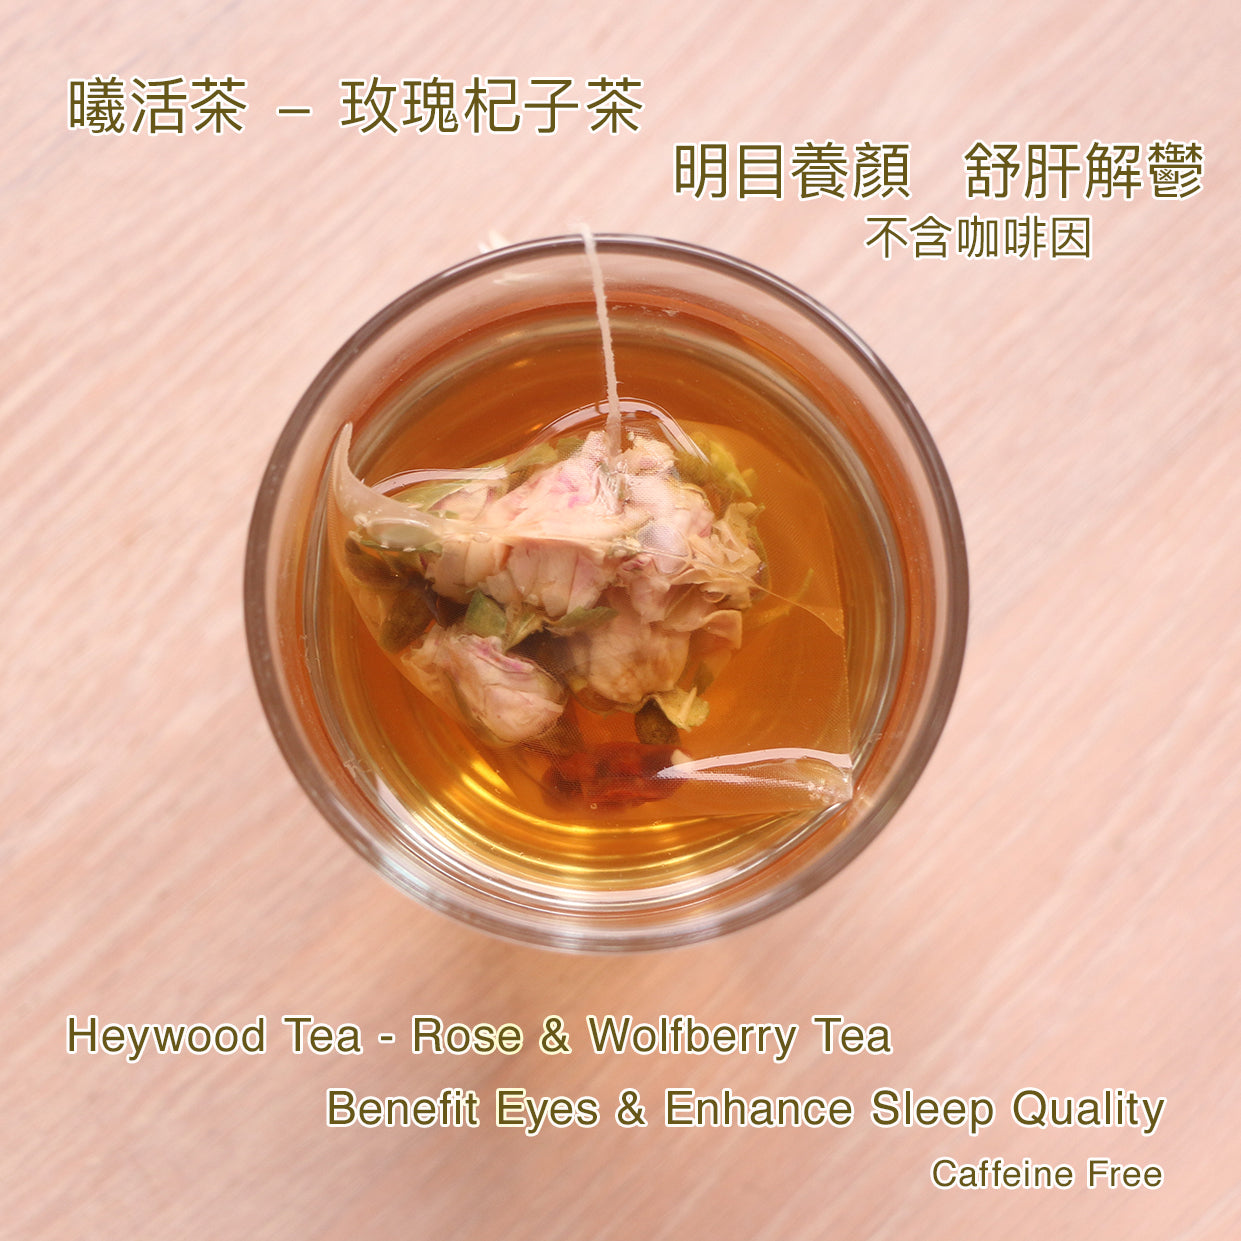 Heywood Tea Rose & Wolfberry Tea|曦活茶 玫瑰杞子茶